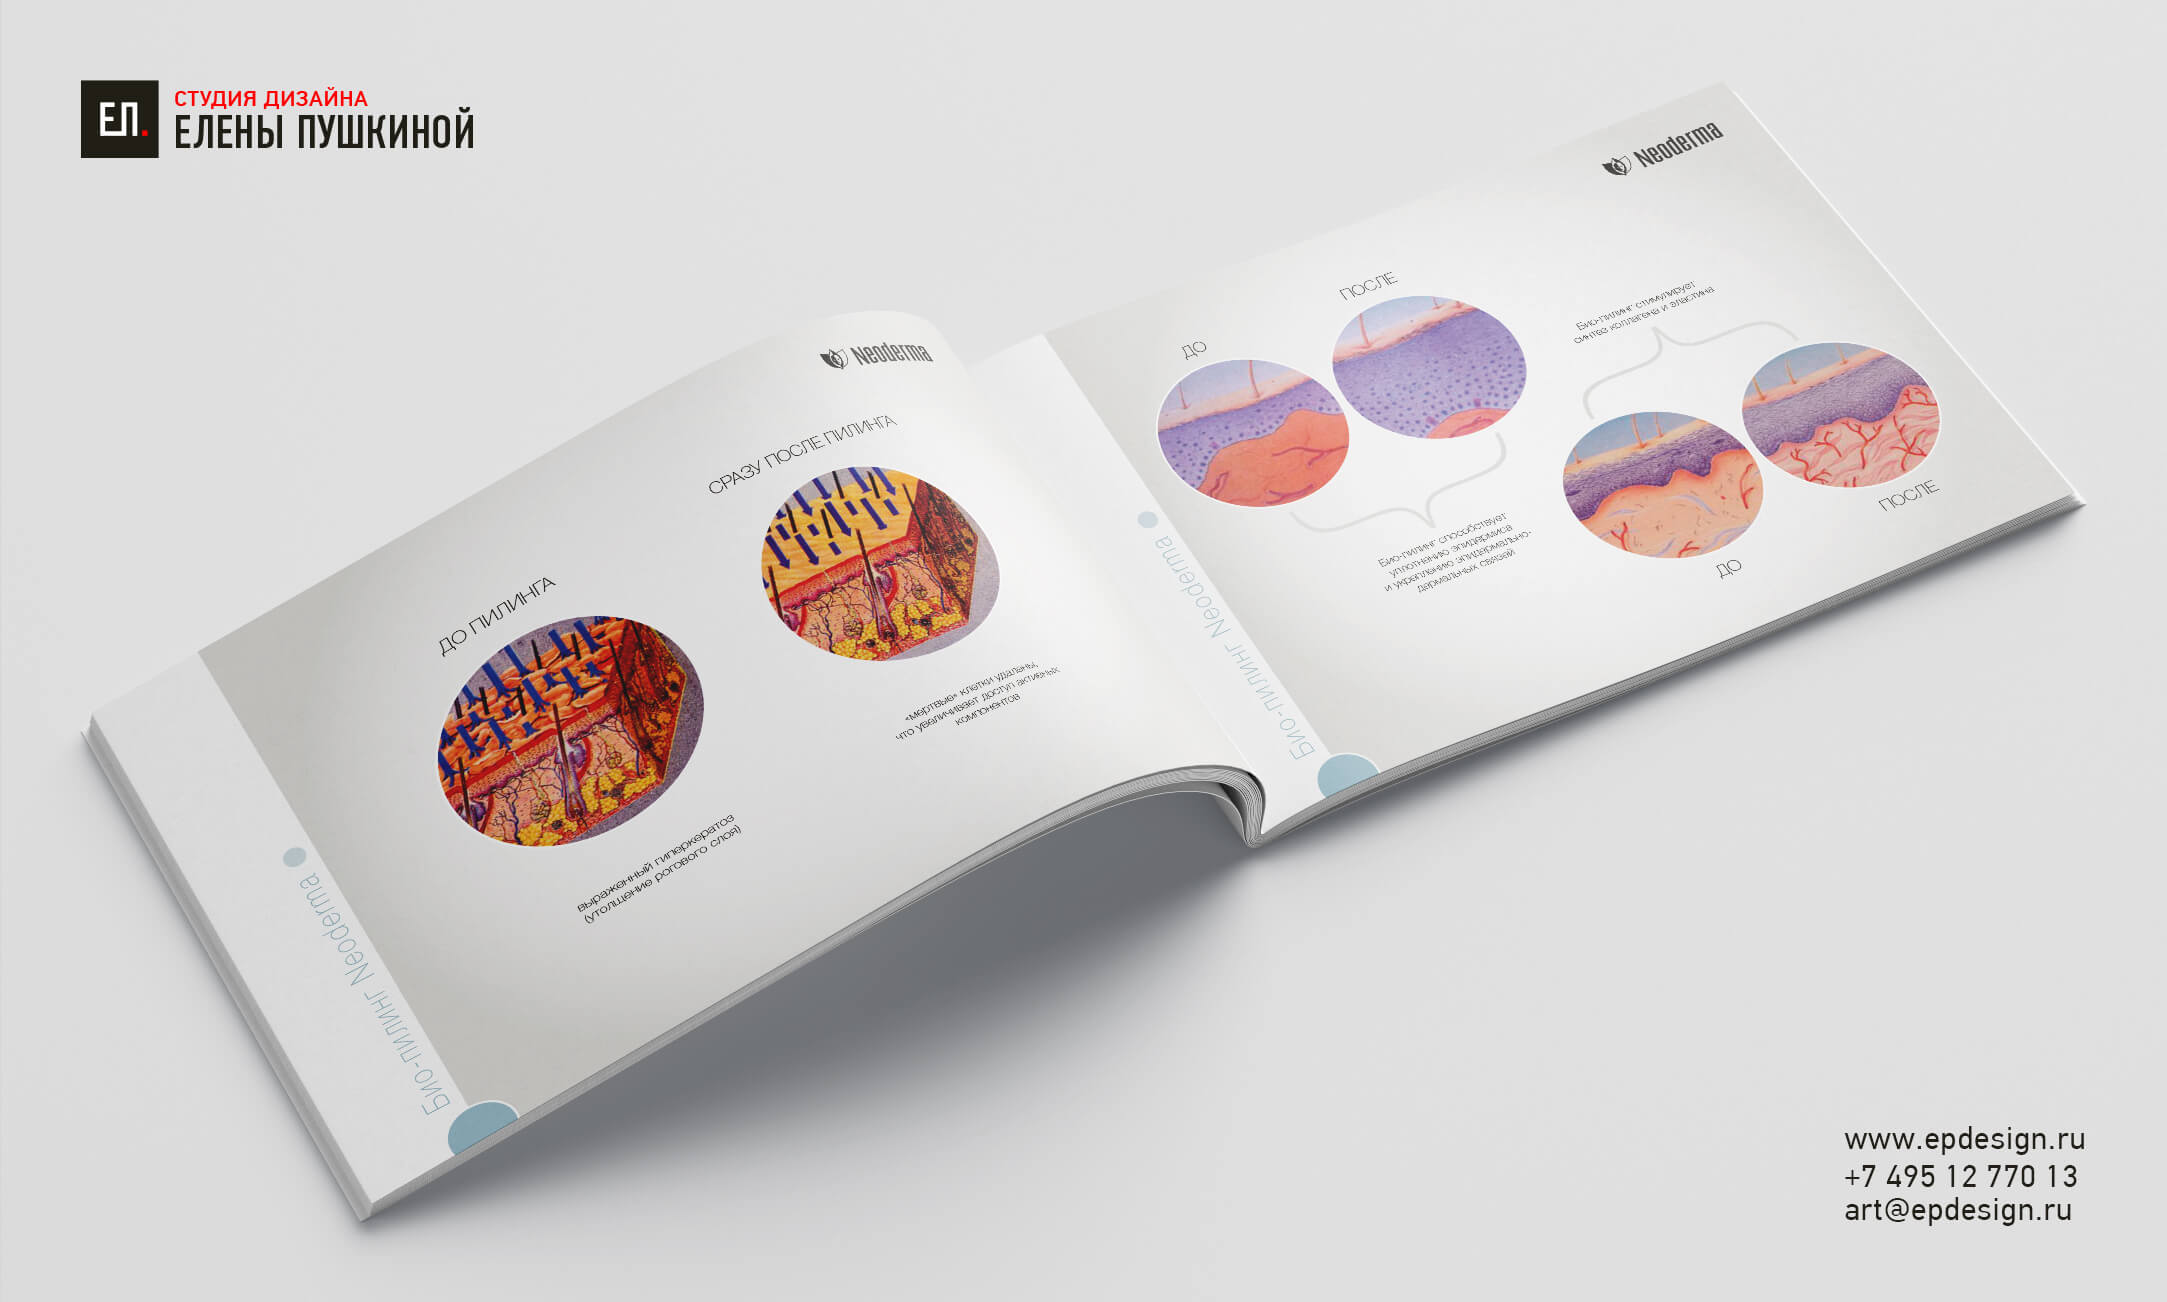 Каталог косметической продукции «NEODERMA» — дизайн с «нуля» обложки, макета и вёрстка каталога Дизайн каталогов Портфолио